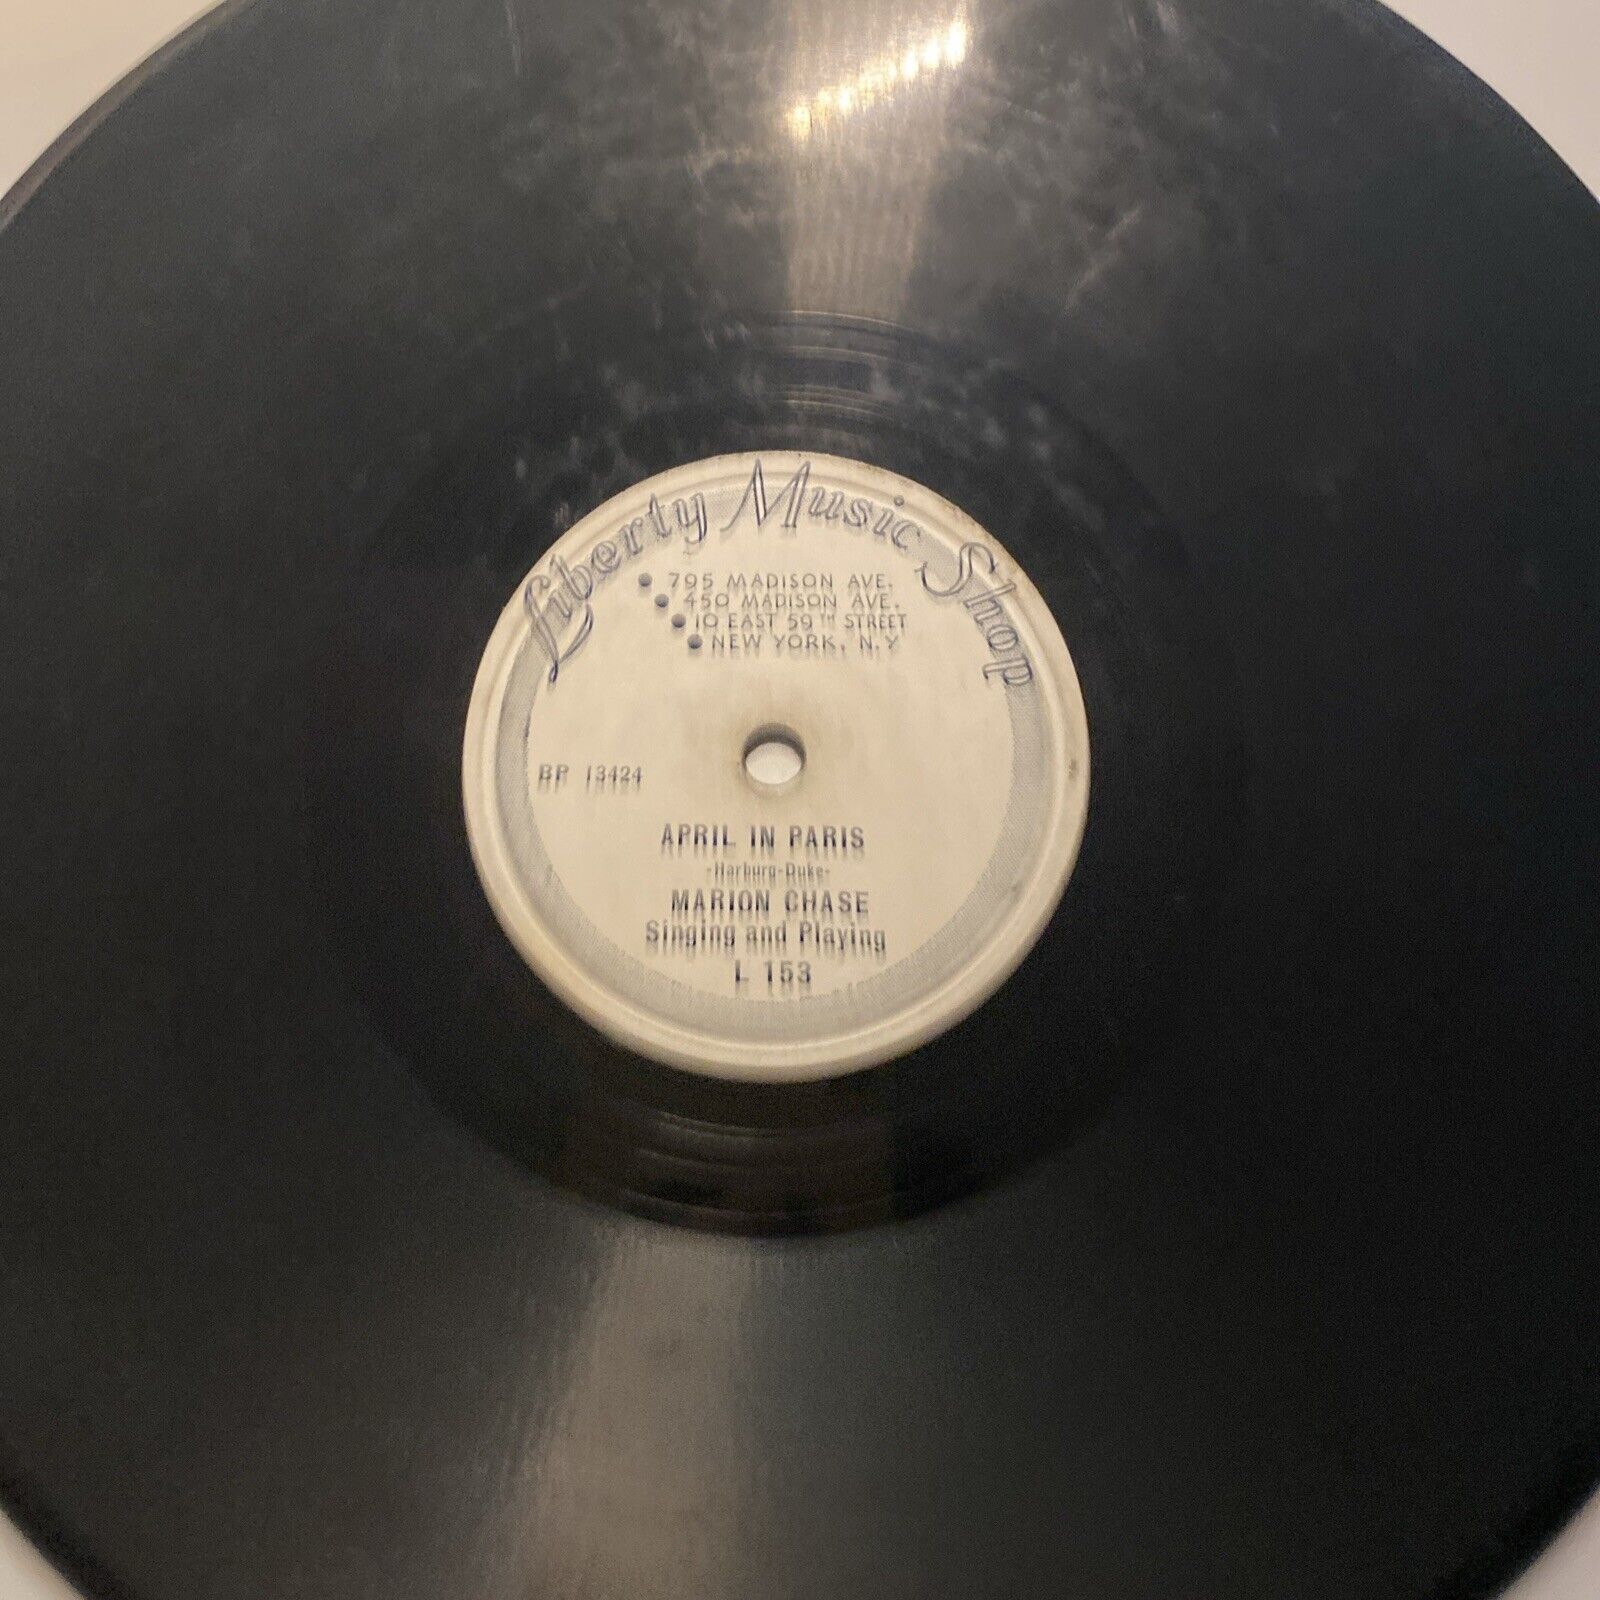 Marion Chase APRIL IN PARIS 78 rpm Liberty Music Shop 153 JAZZ 1933 V+